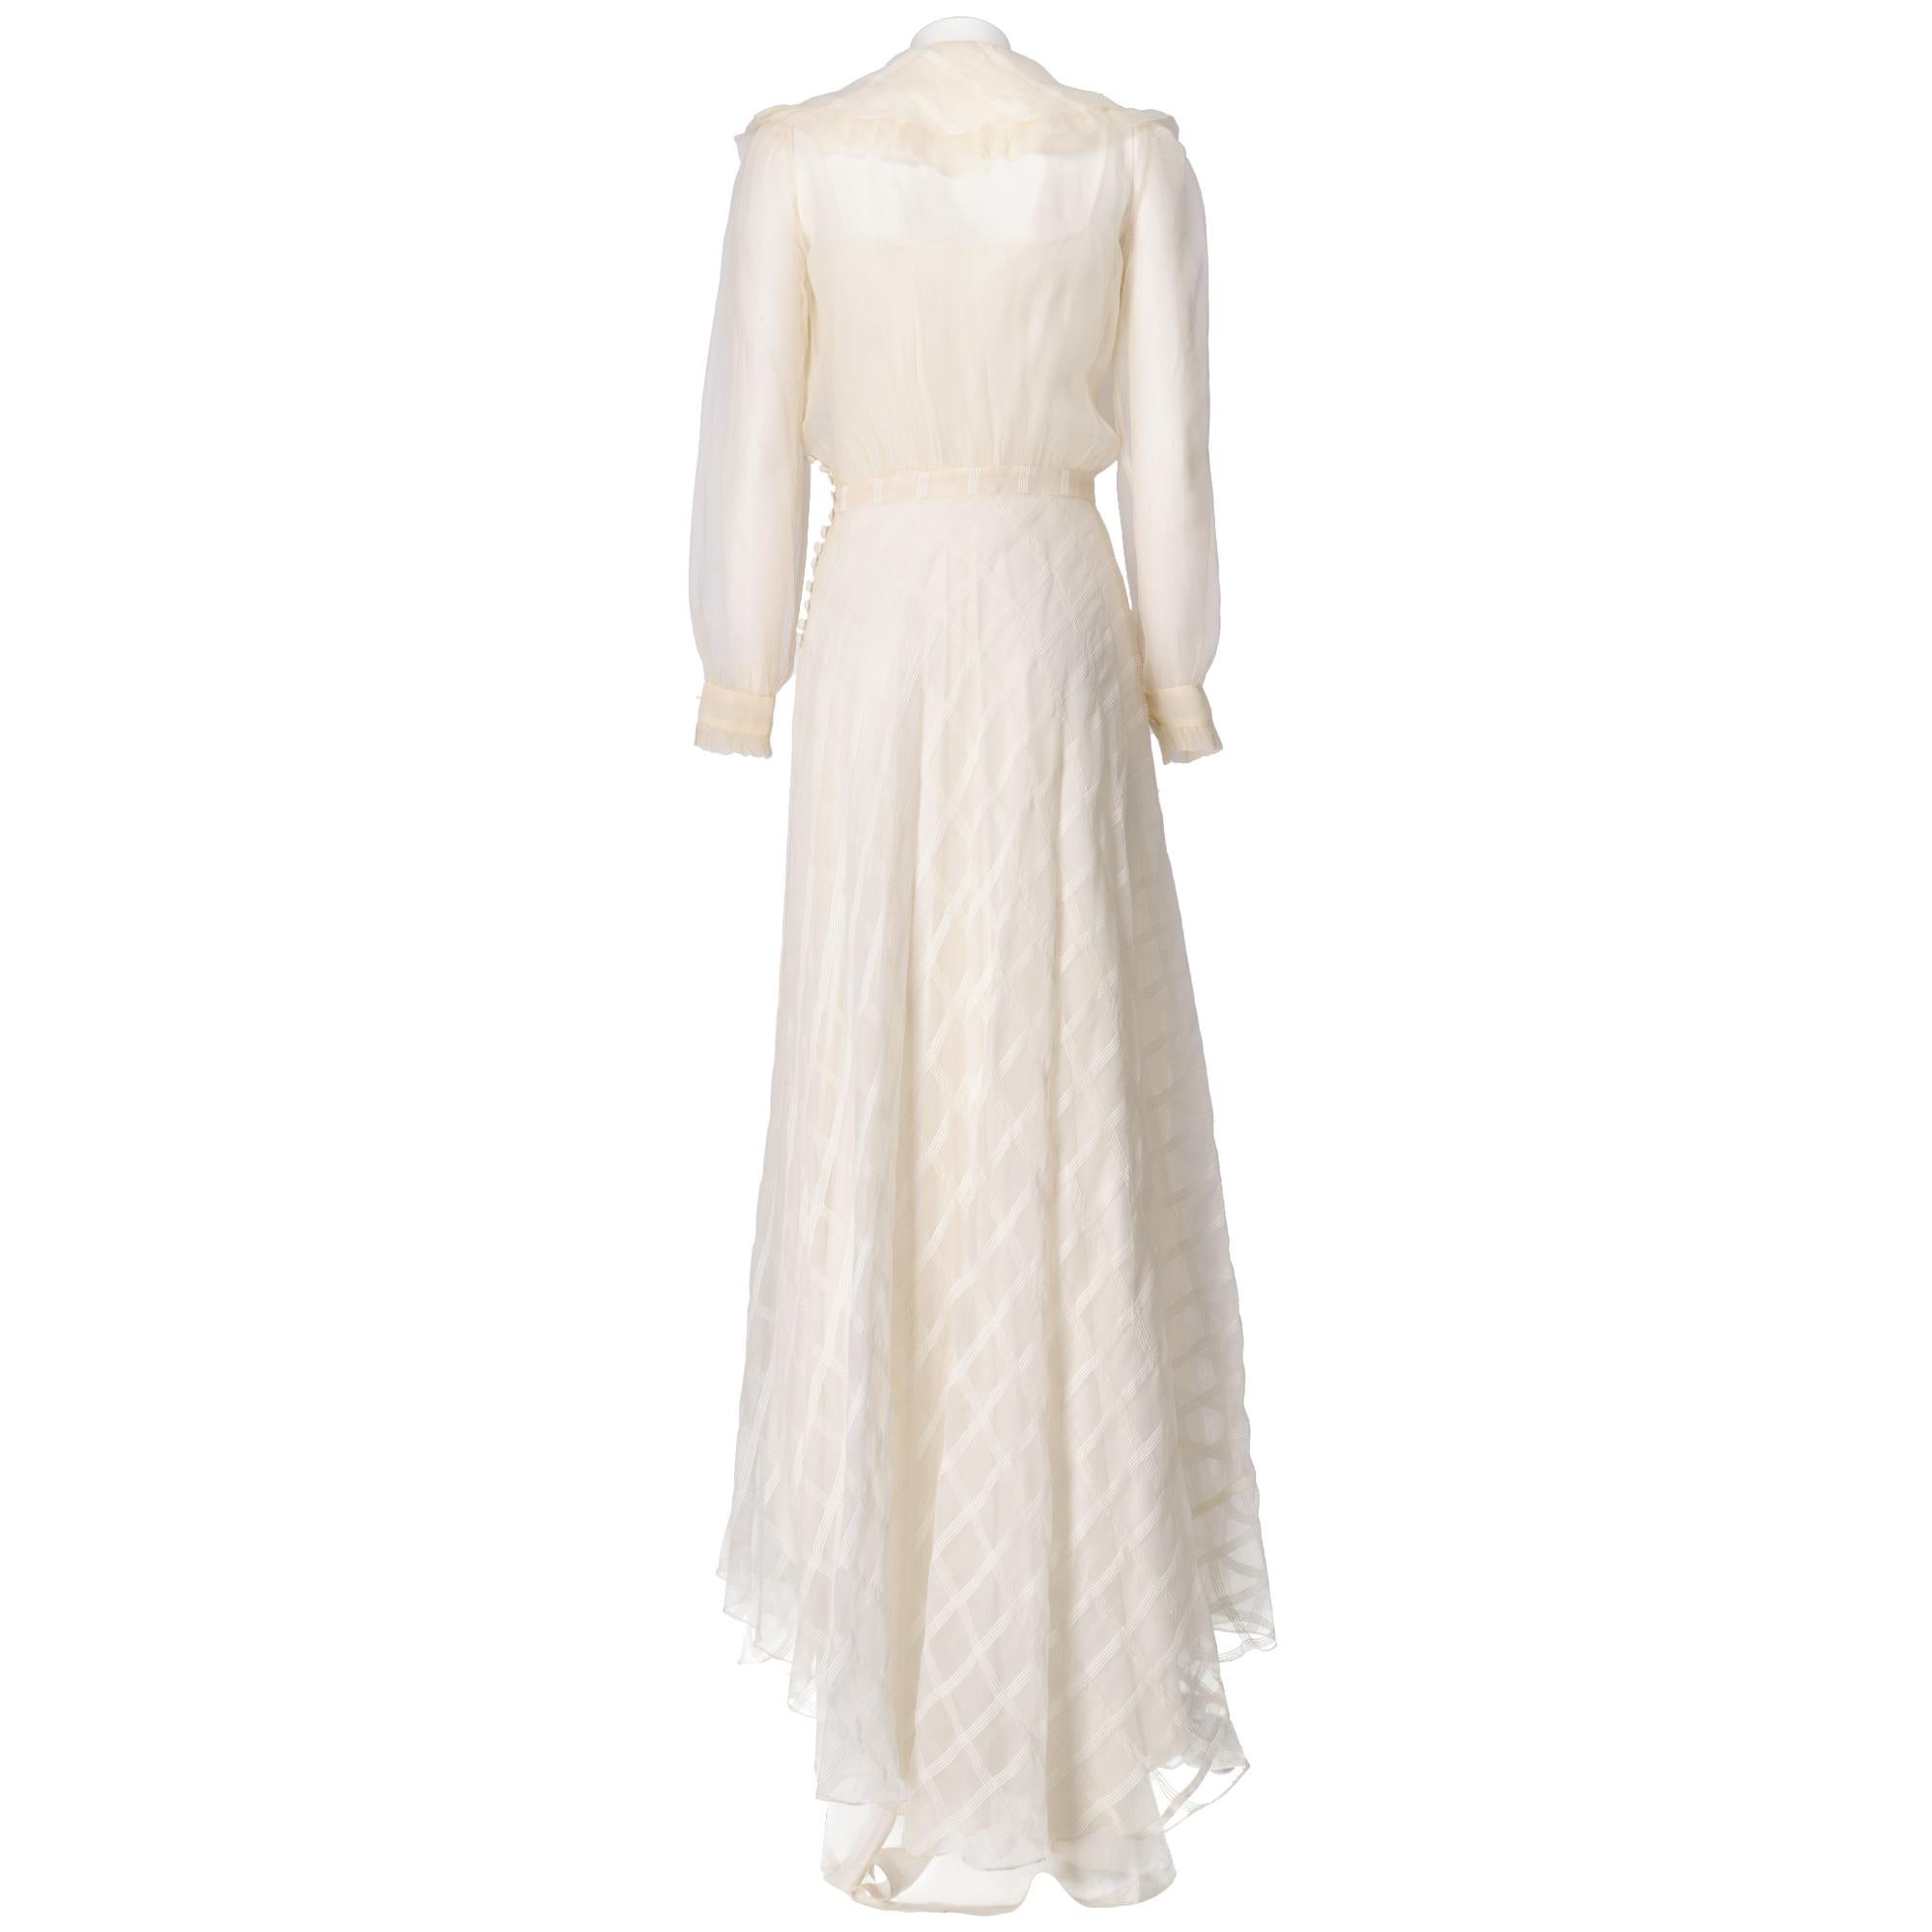 Beige 1970s Tailored Semitransparent Wedding Dress